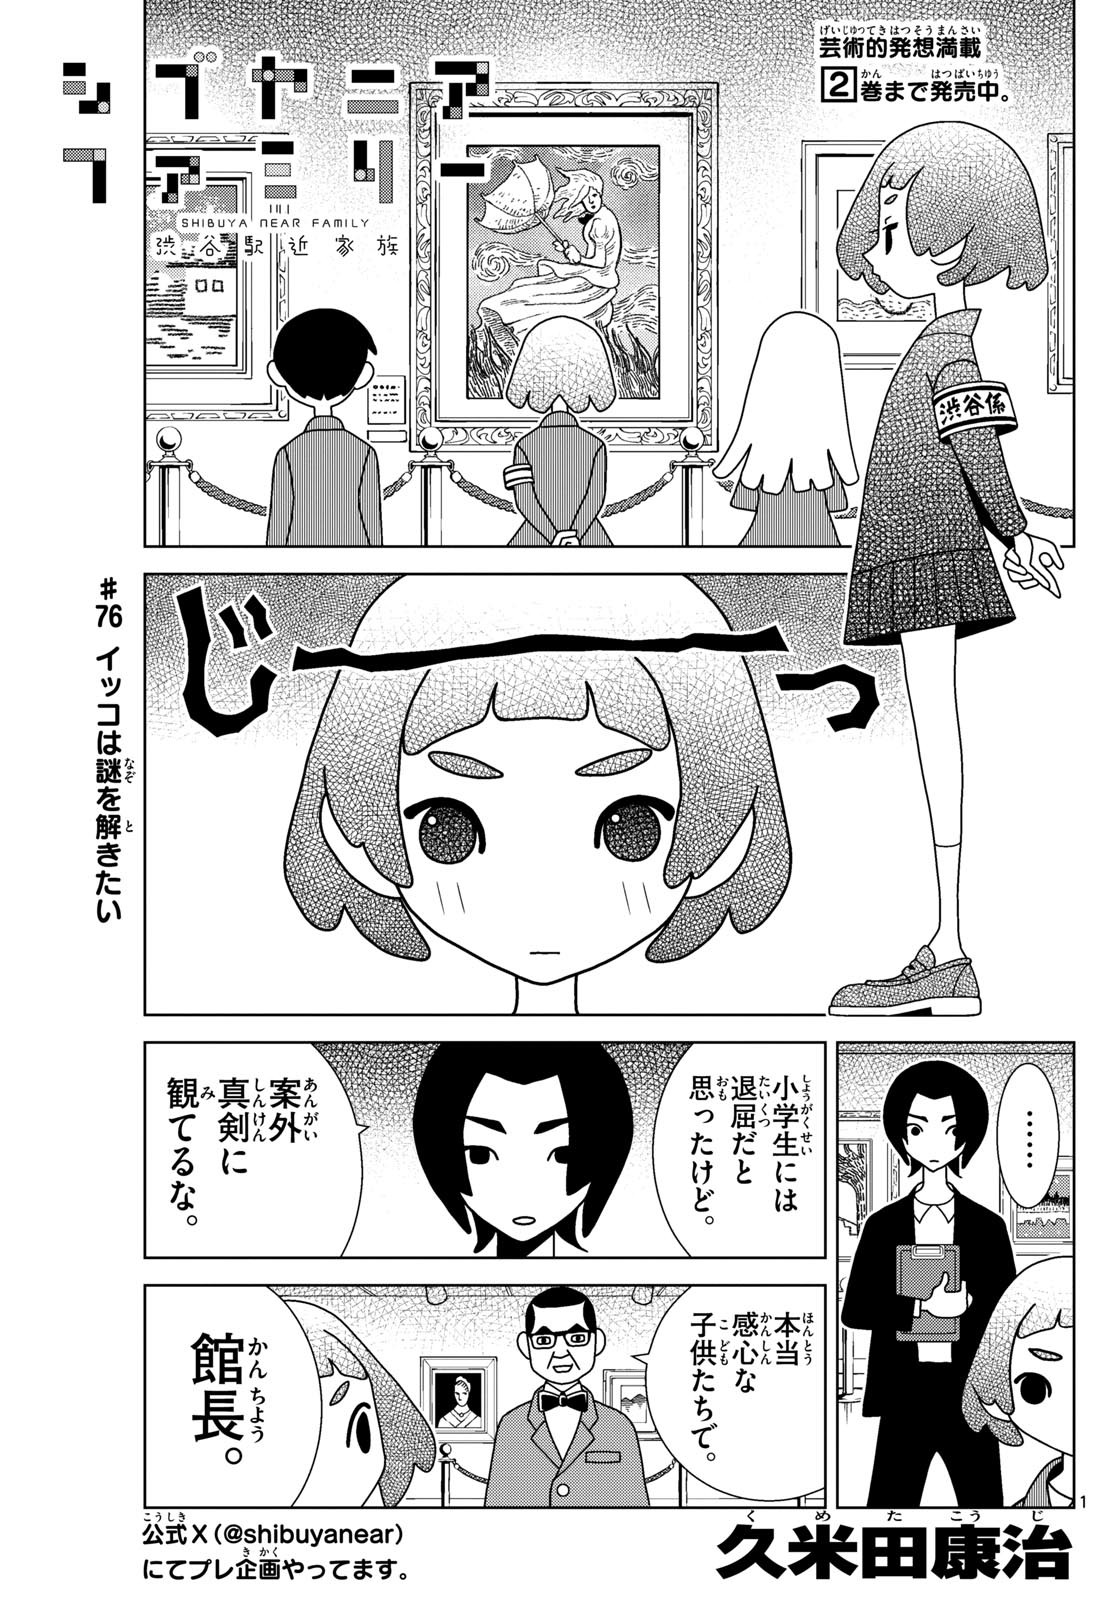 Shibuya Near Family - Chapter 076 - Page 1